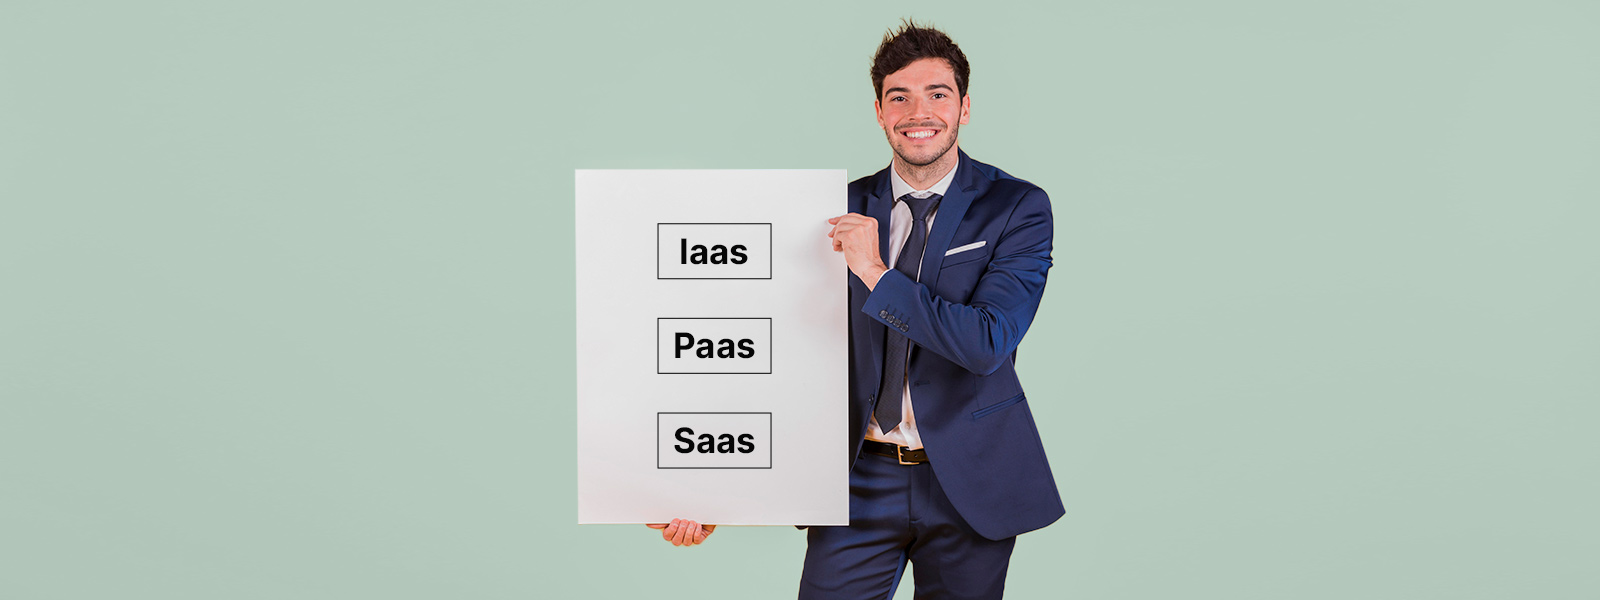 IAAS vs PAAS vs SAAS